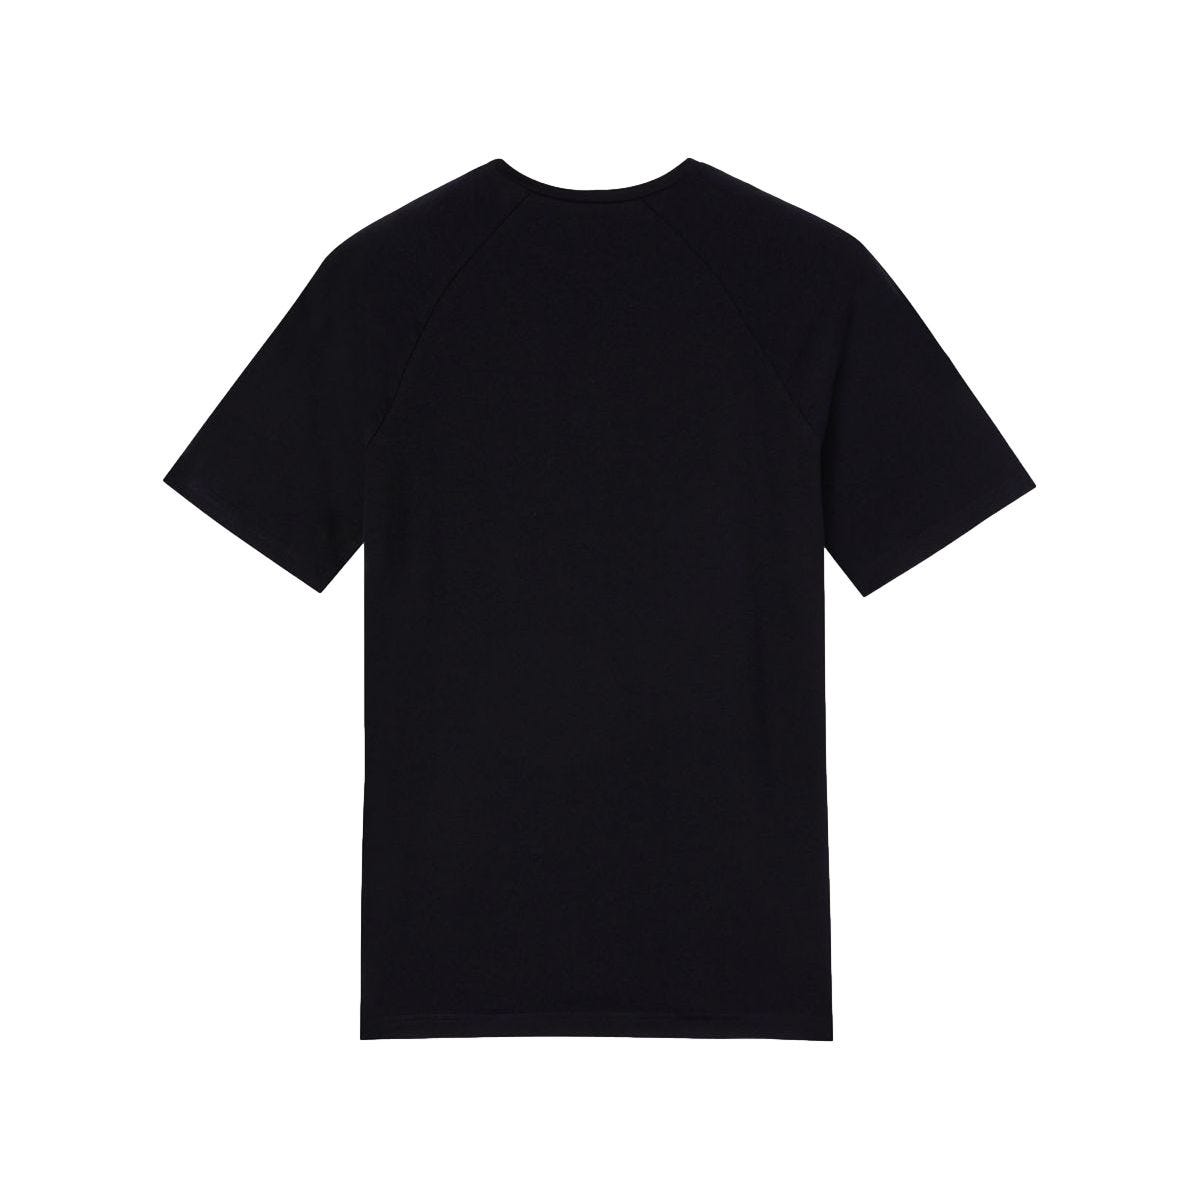 Tee-shirt Temp-IQ Noir - Dickies - Taille S 1